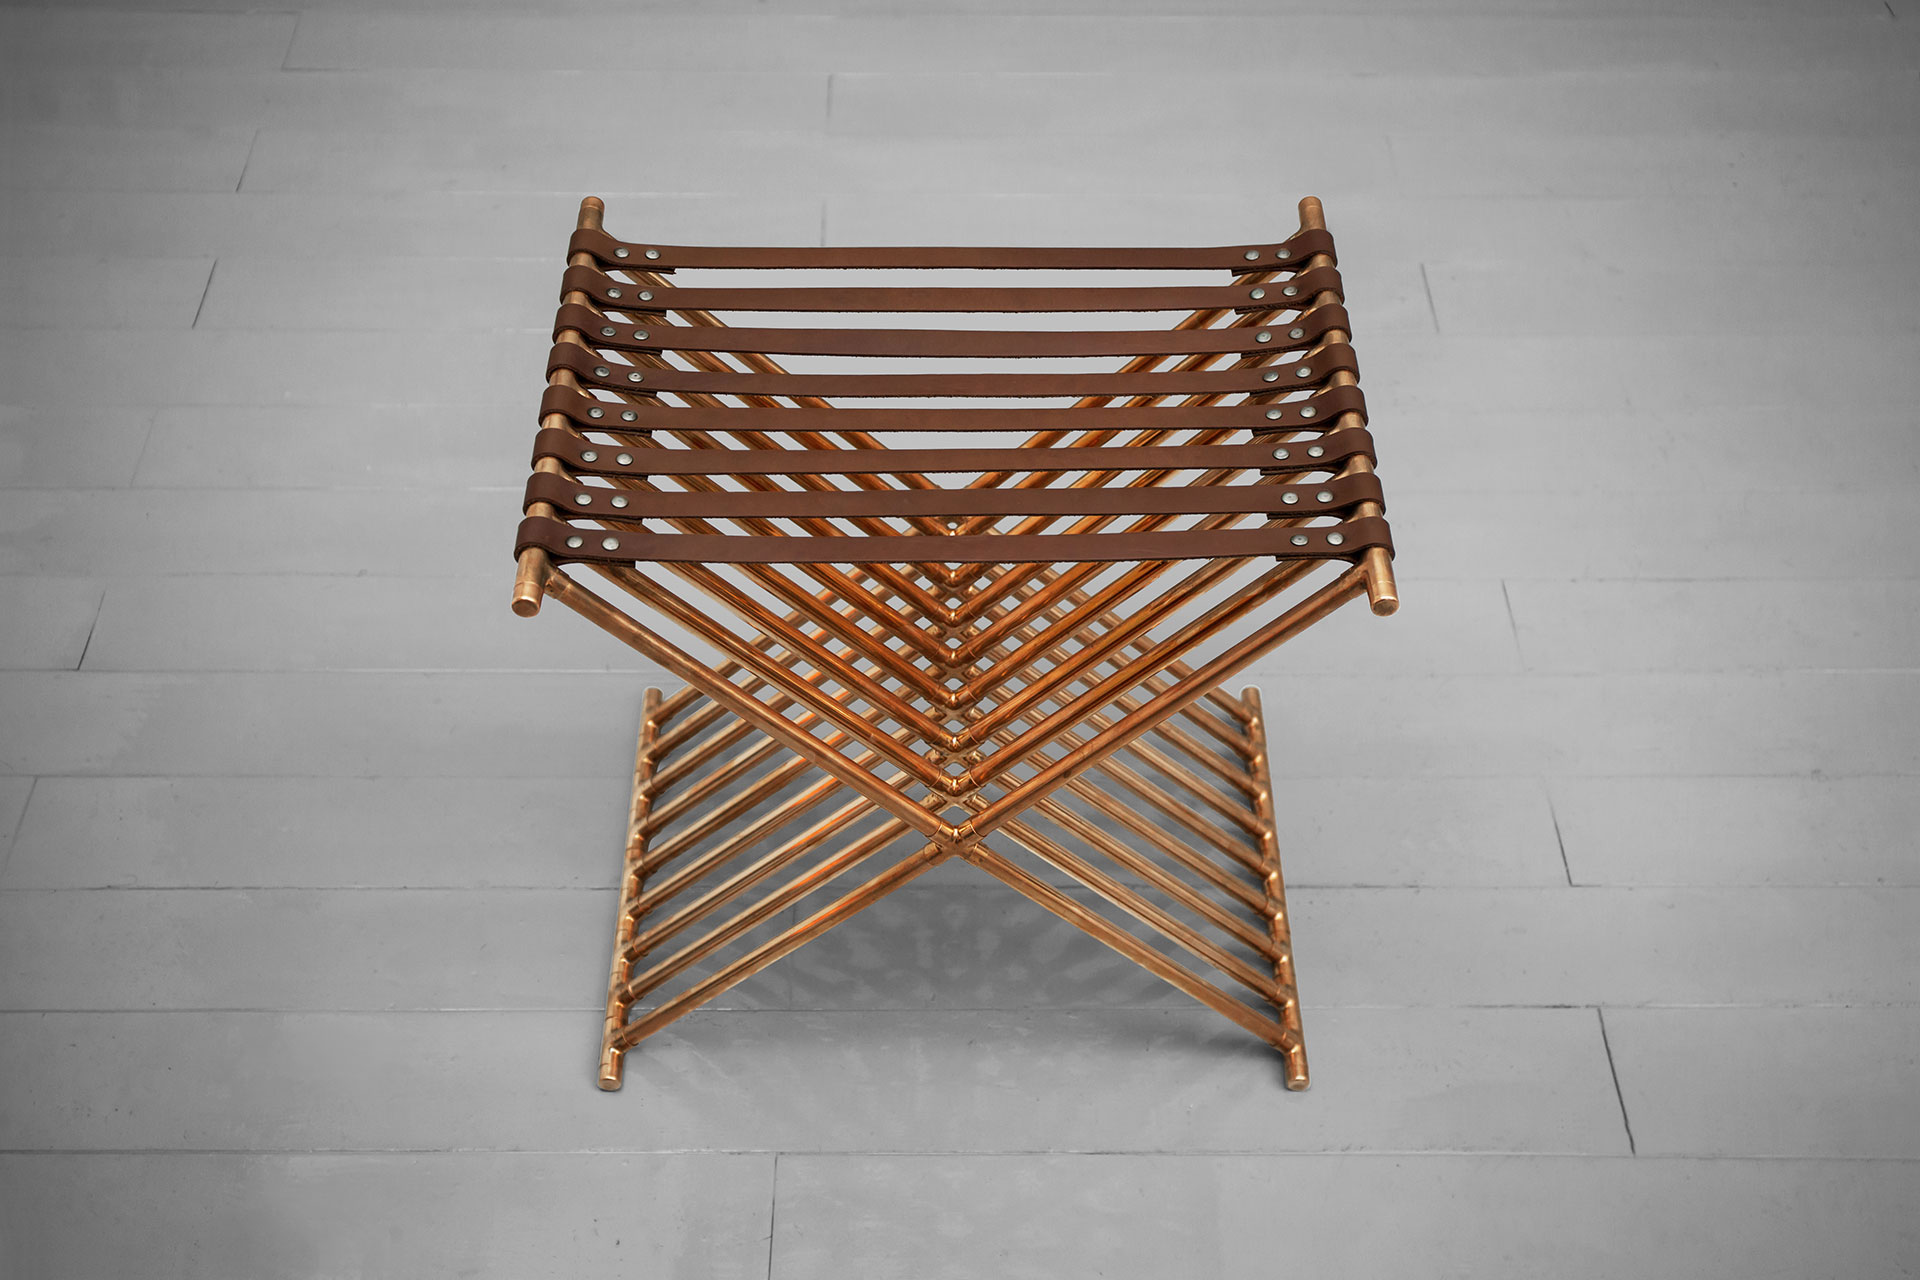 Modern scissor chair inspired by geometric design